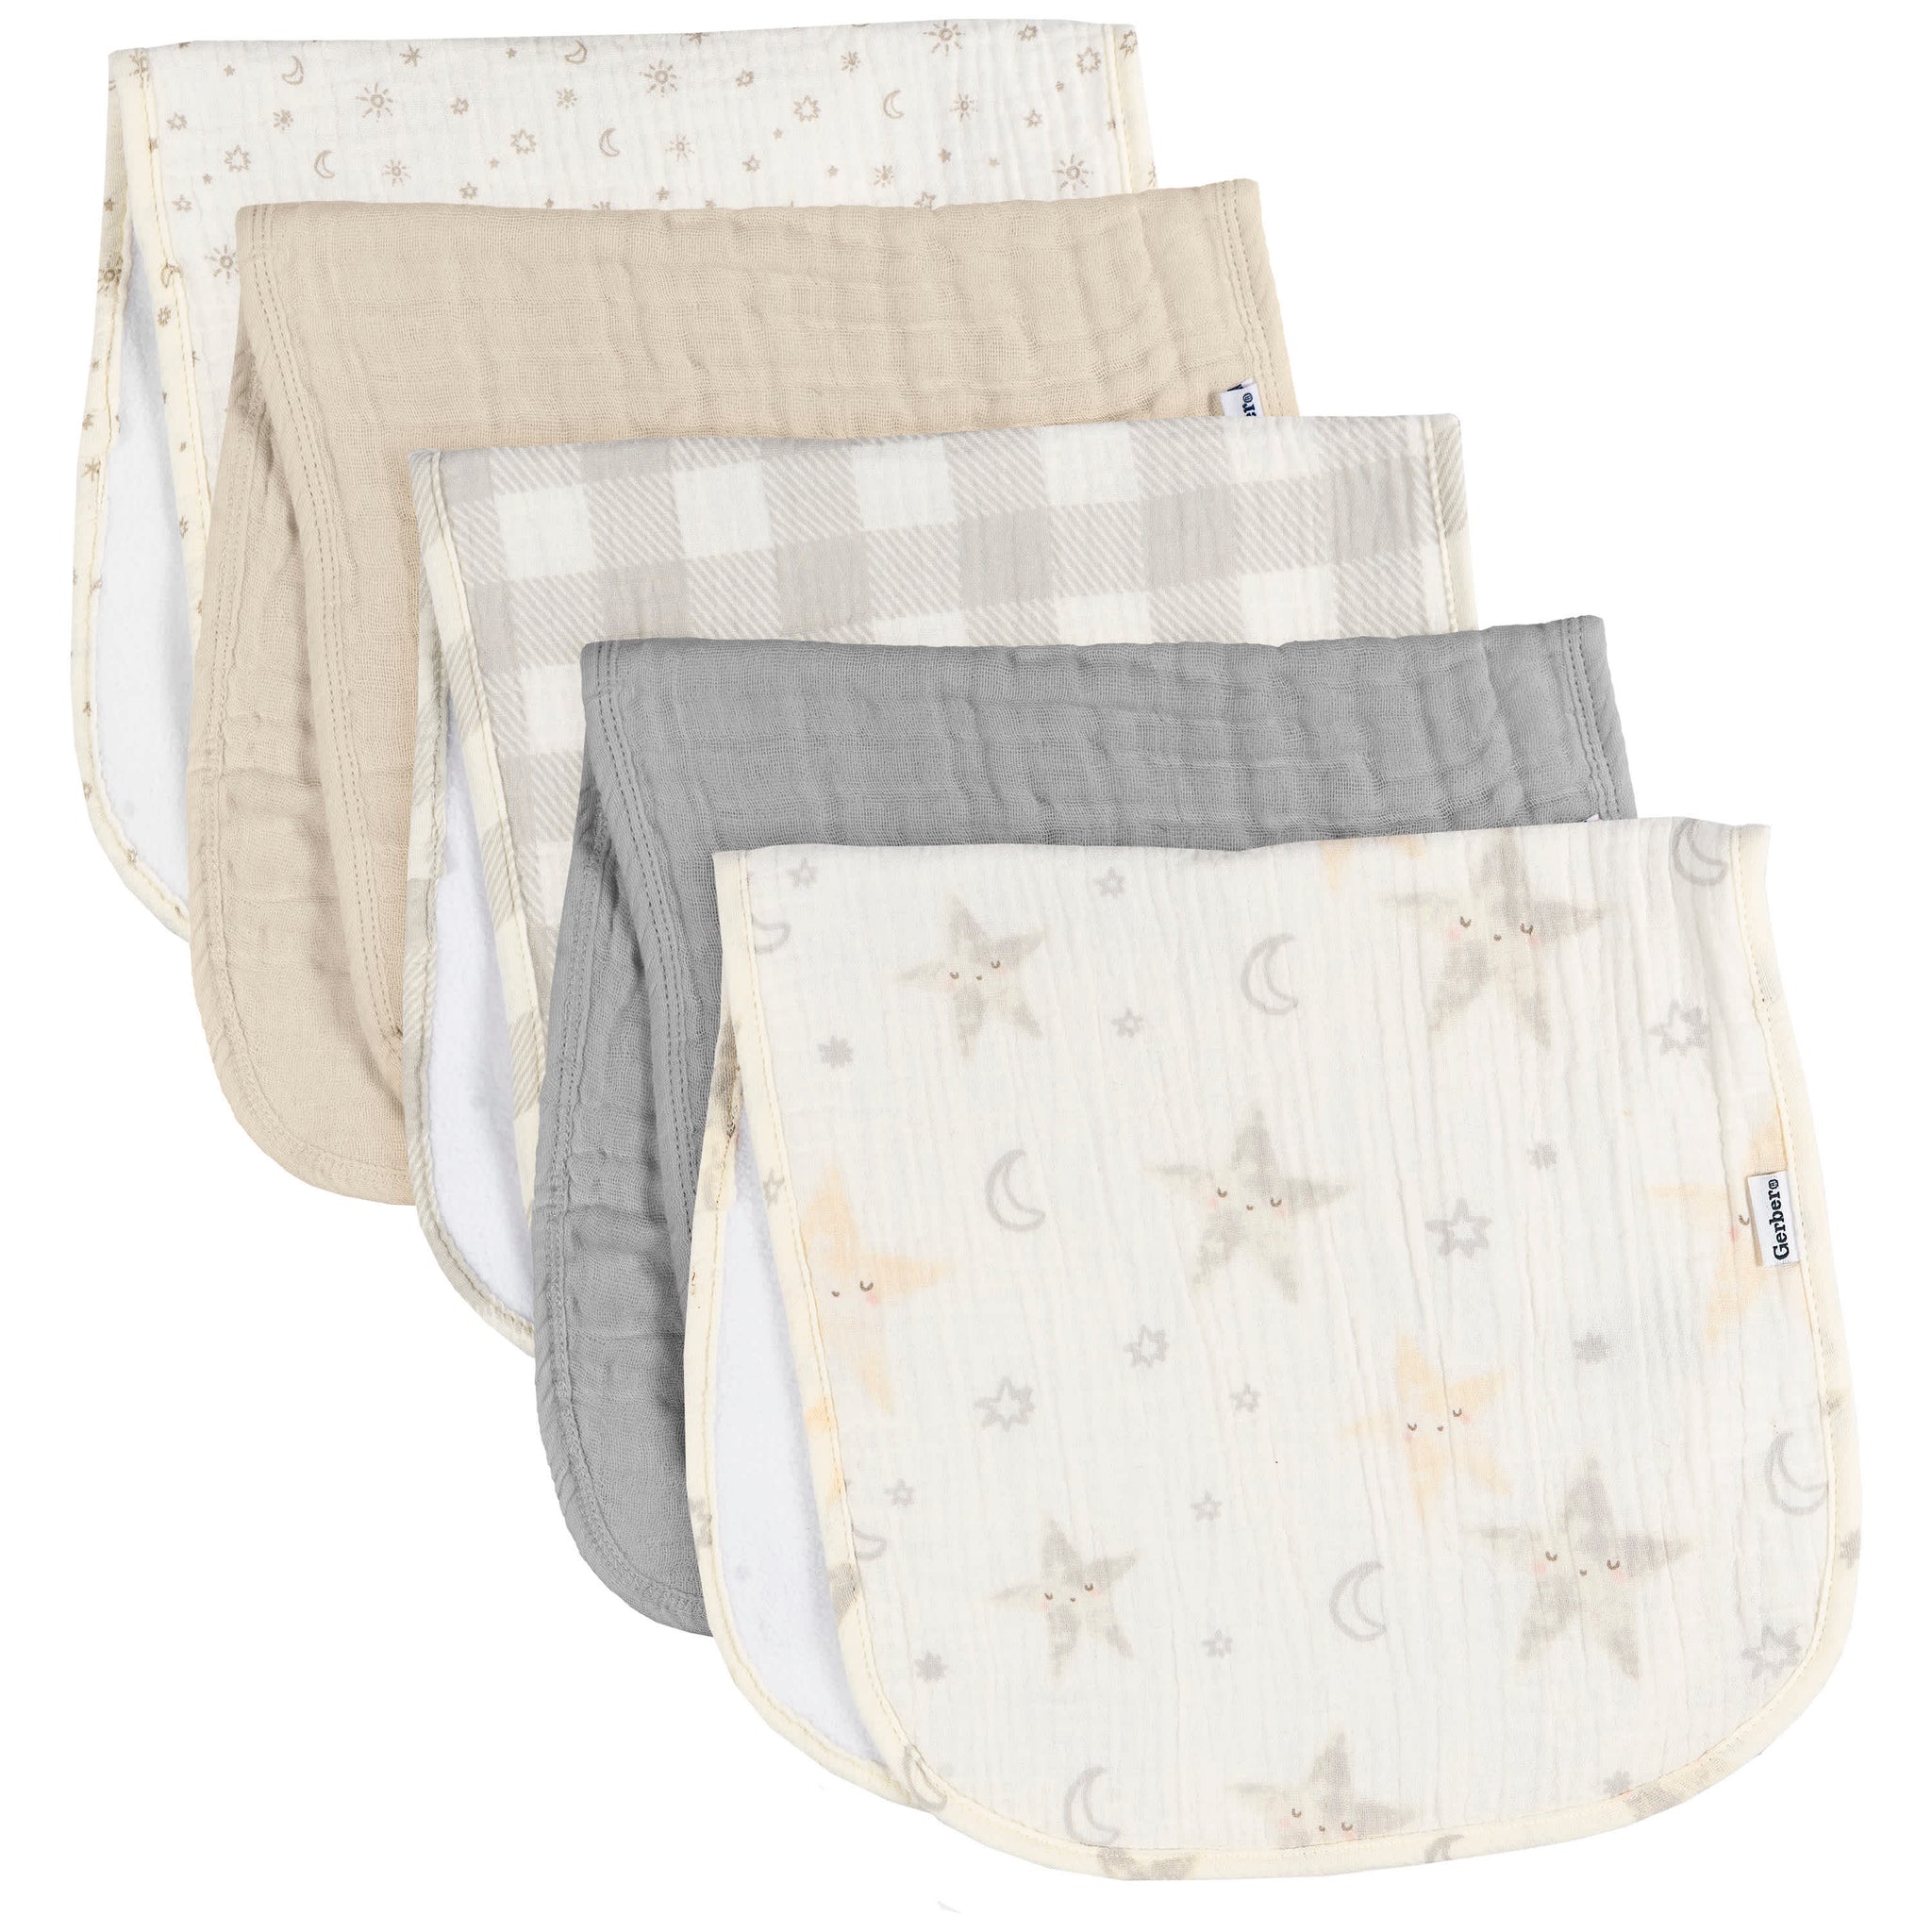 5-Pack Baby Neutral Multi Stars Muslin Burpcloth-Gerber Childrenswear Wholesale